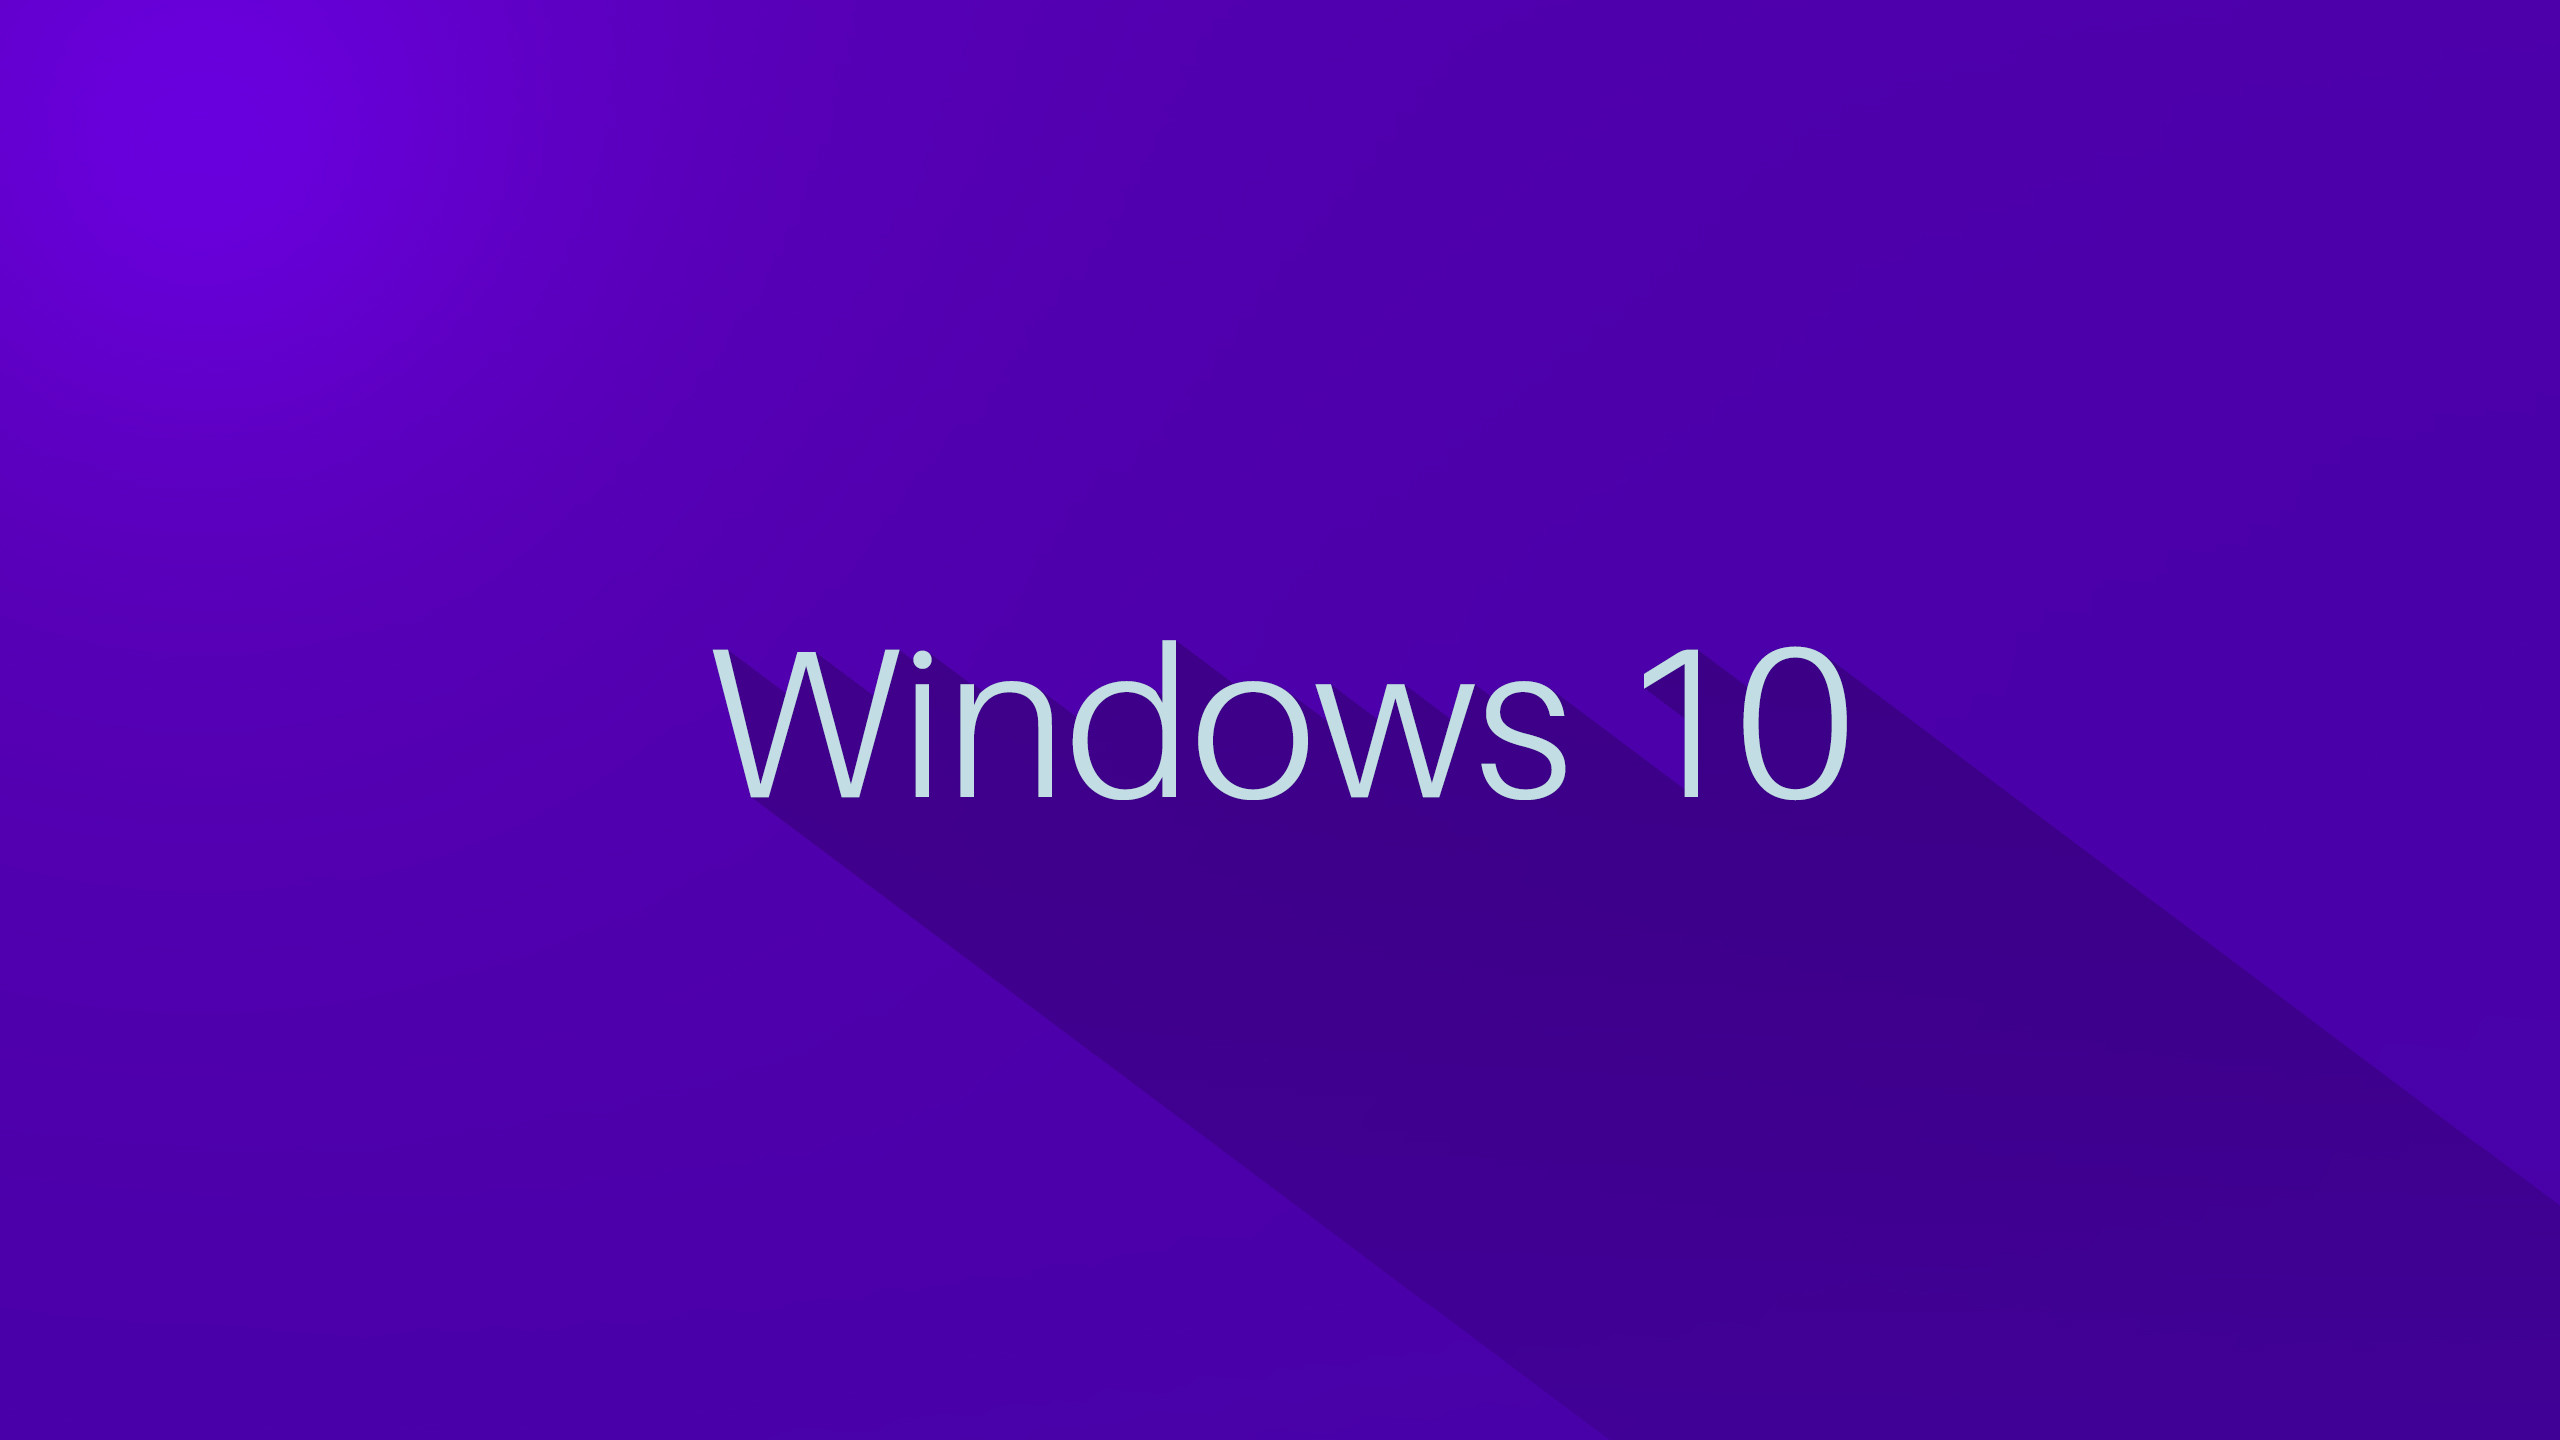 2560x1440 Purple Windows 10 Wallpaper Background 49913